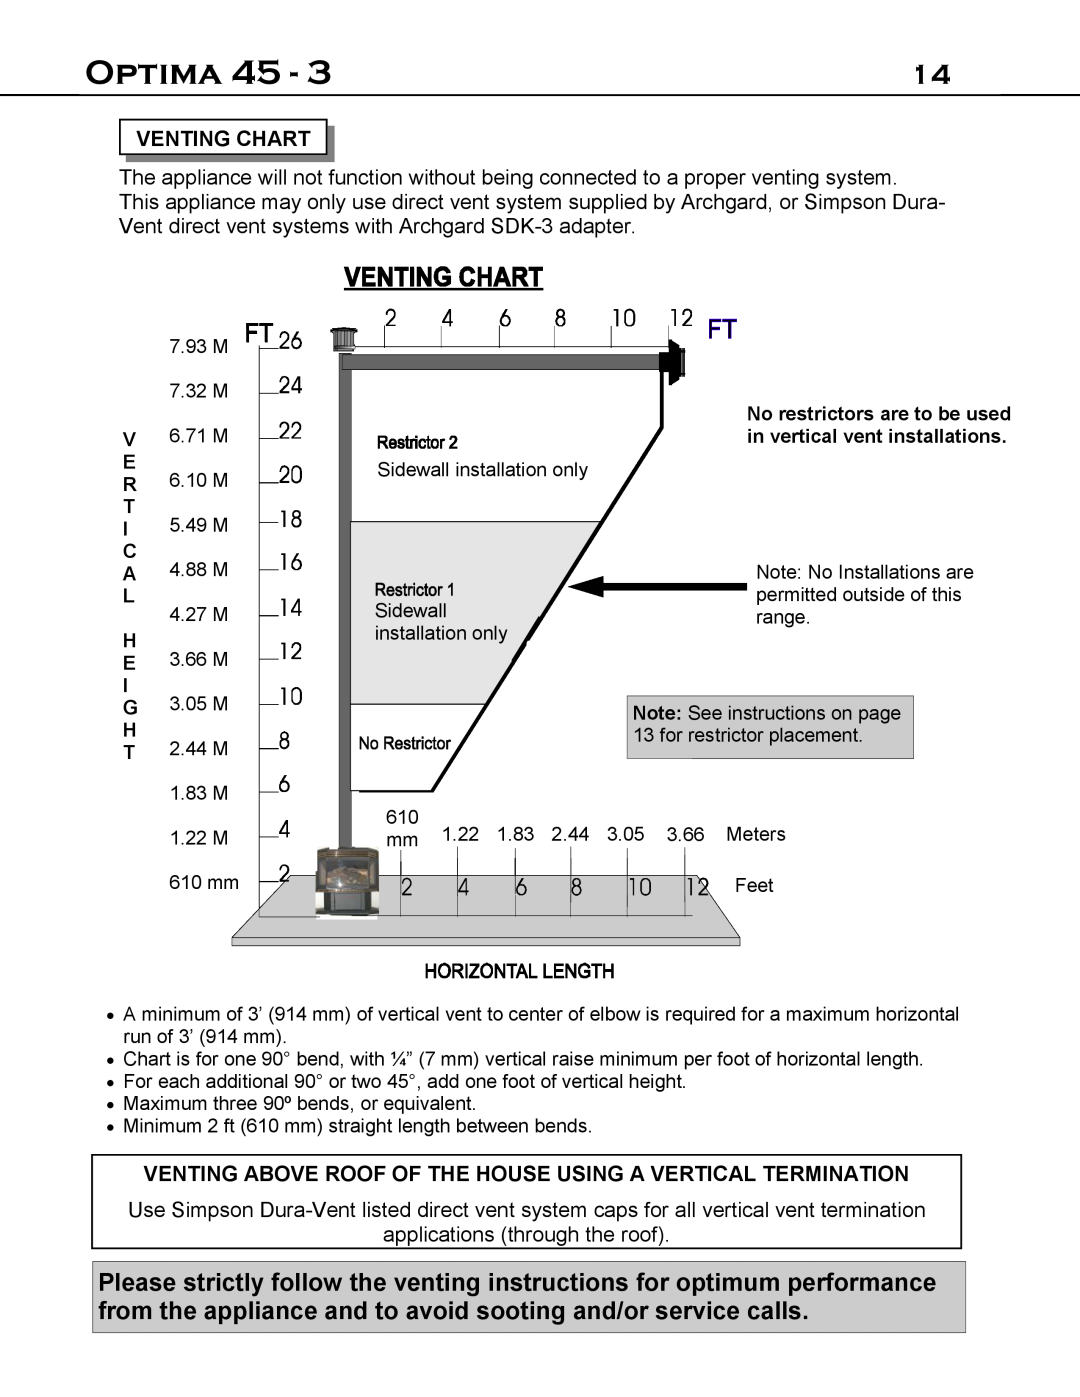 Optima Company 45 - 3 manual Venting Chart, Optima 